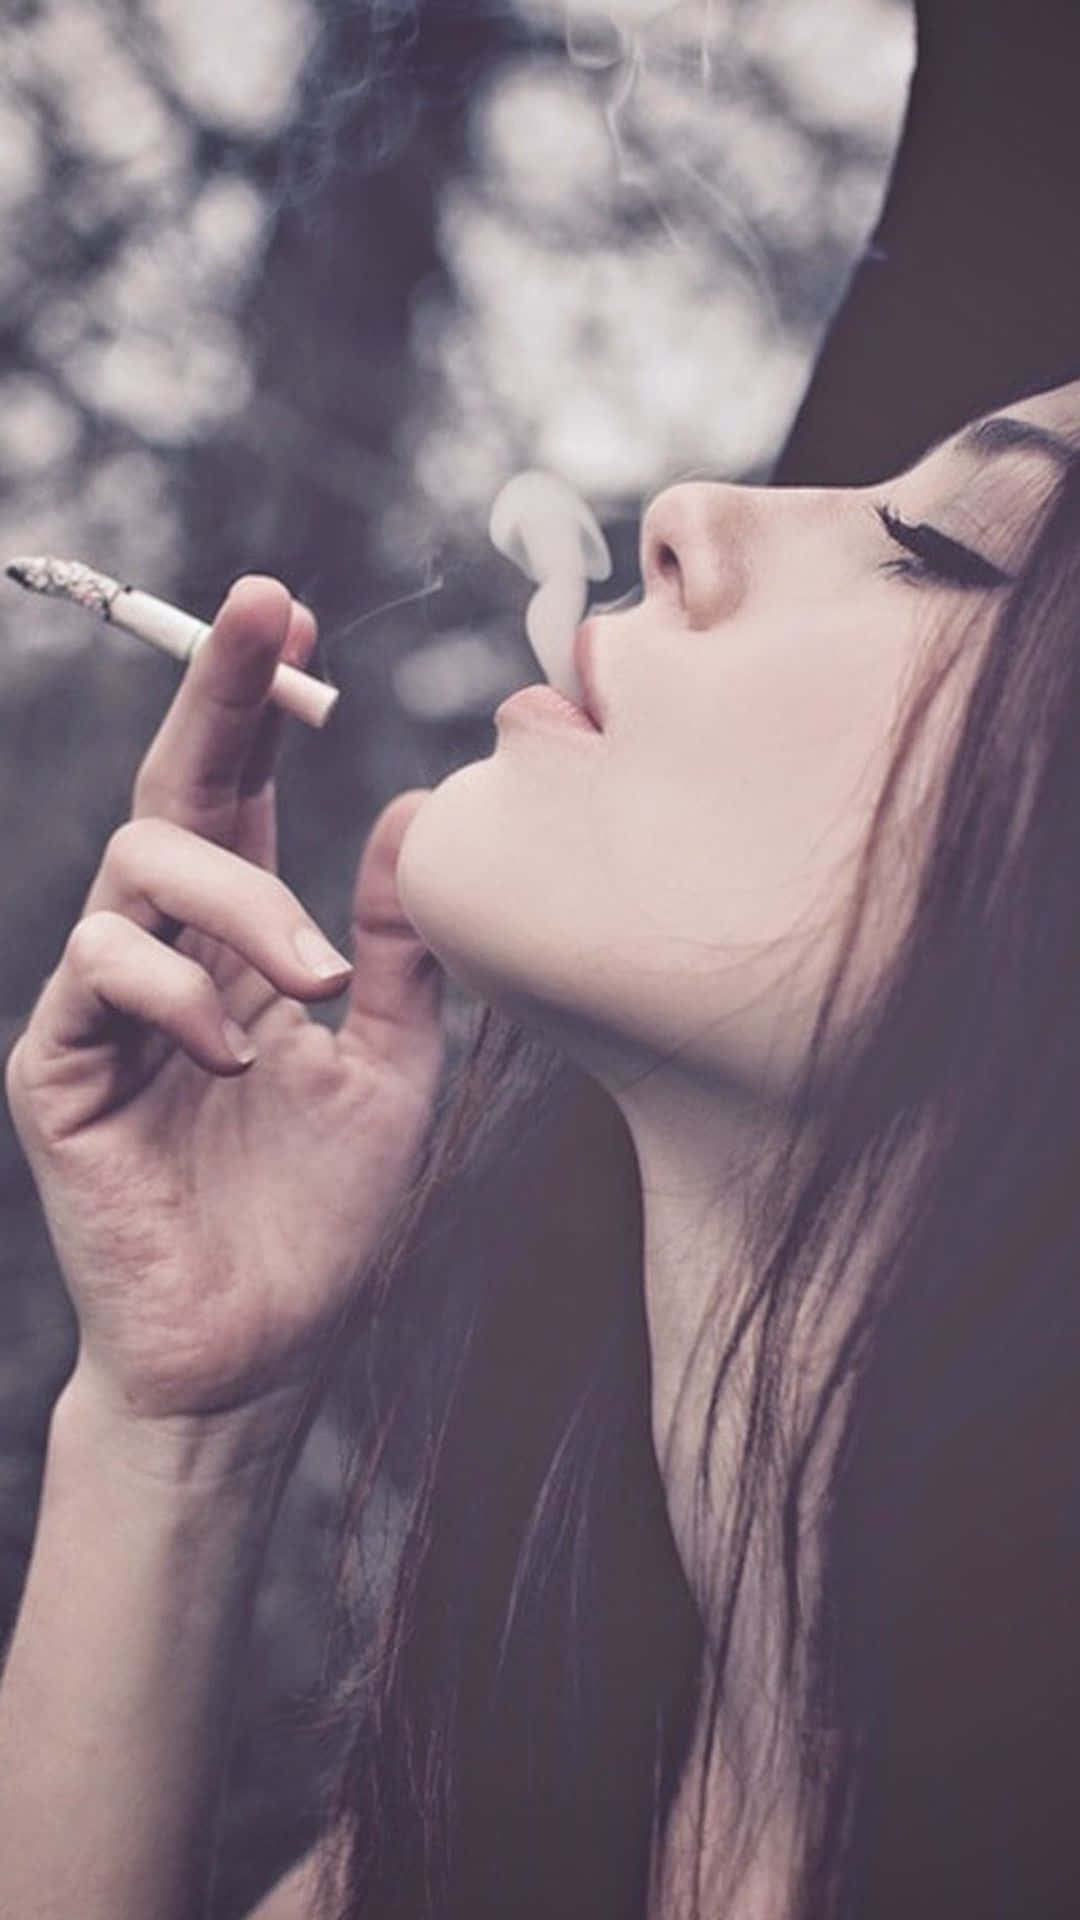 Tumblr Aesthetic Girl Smoking